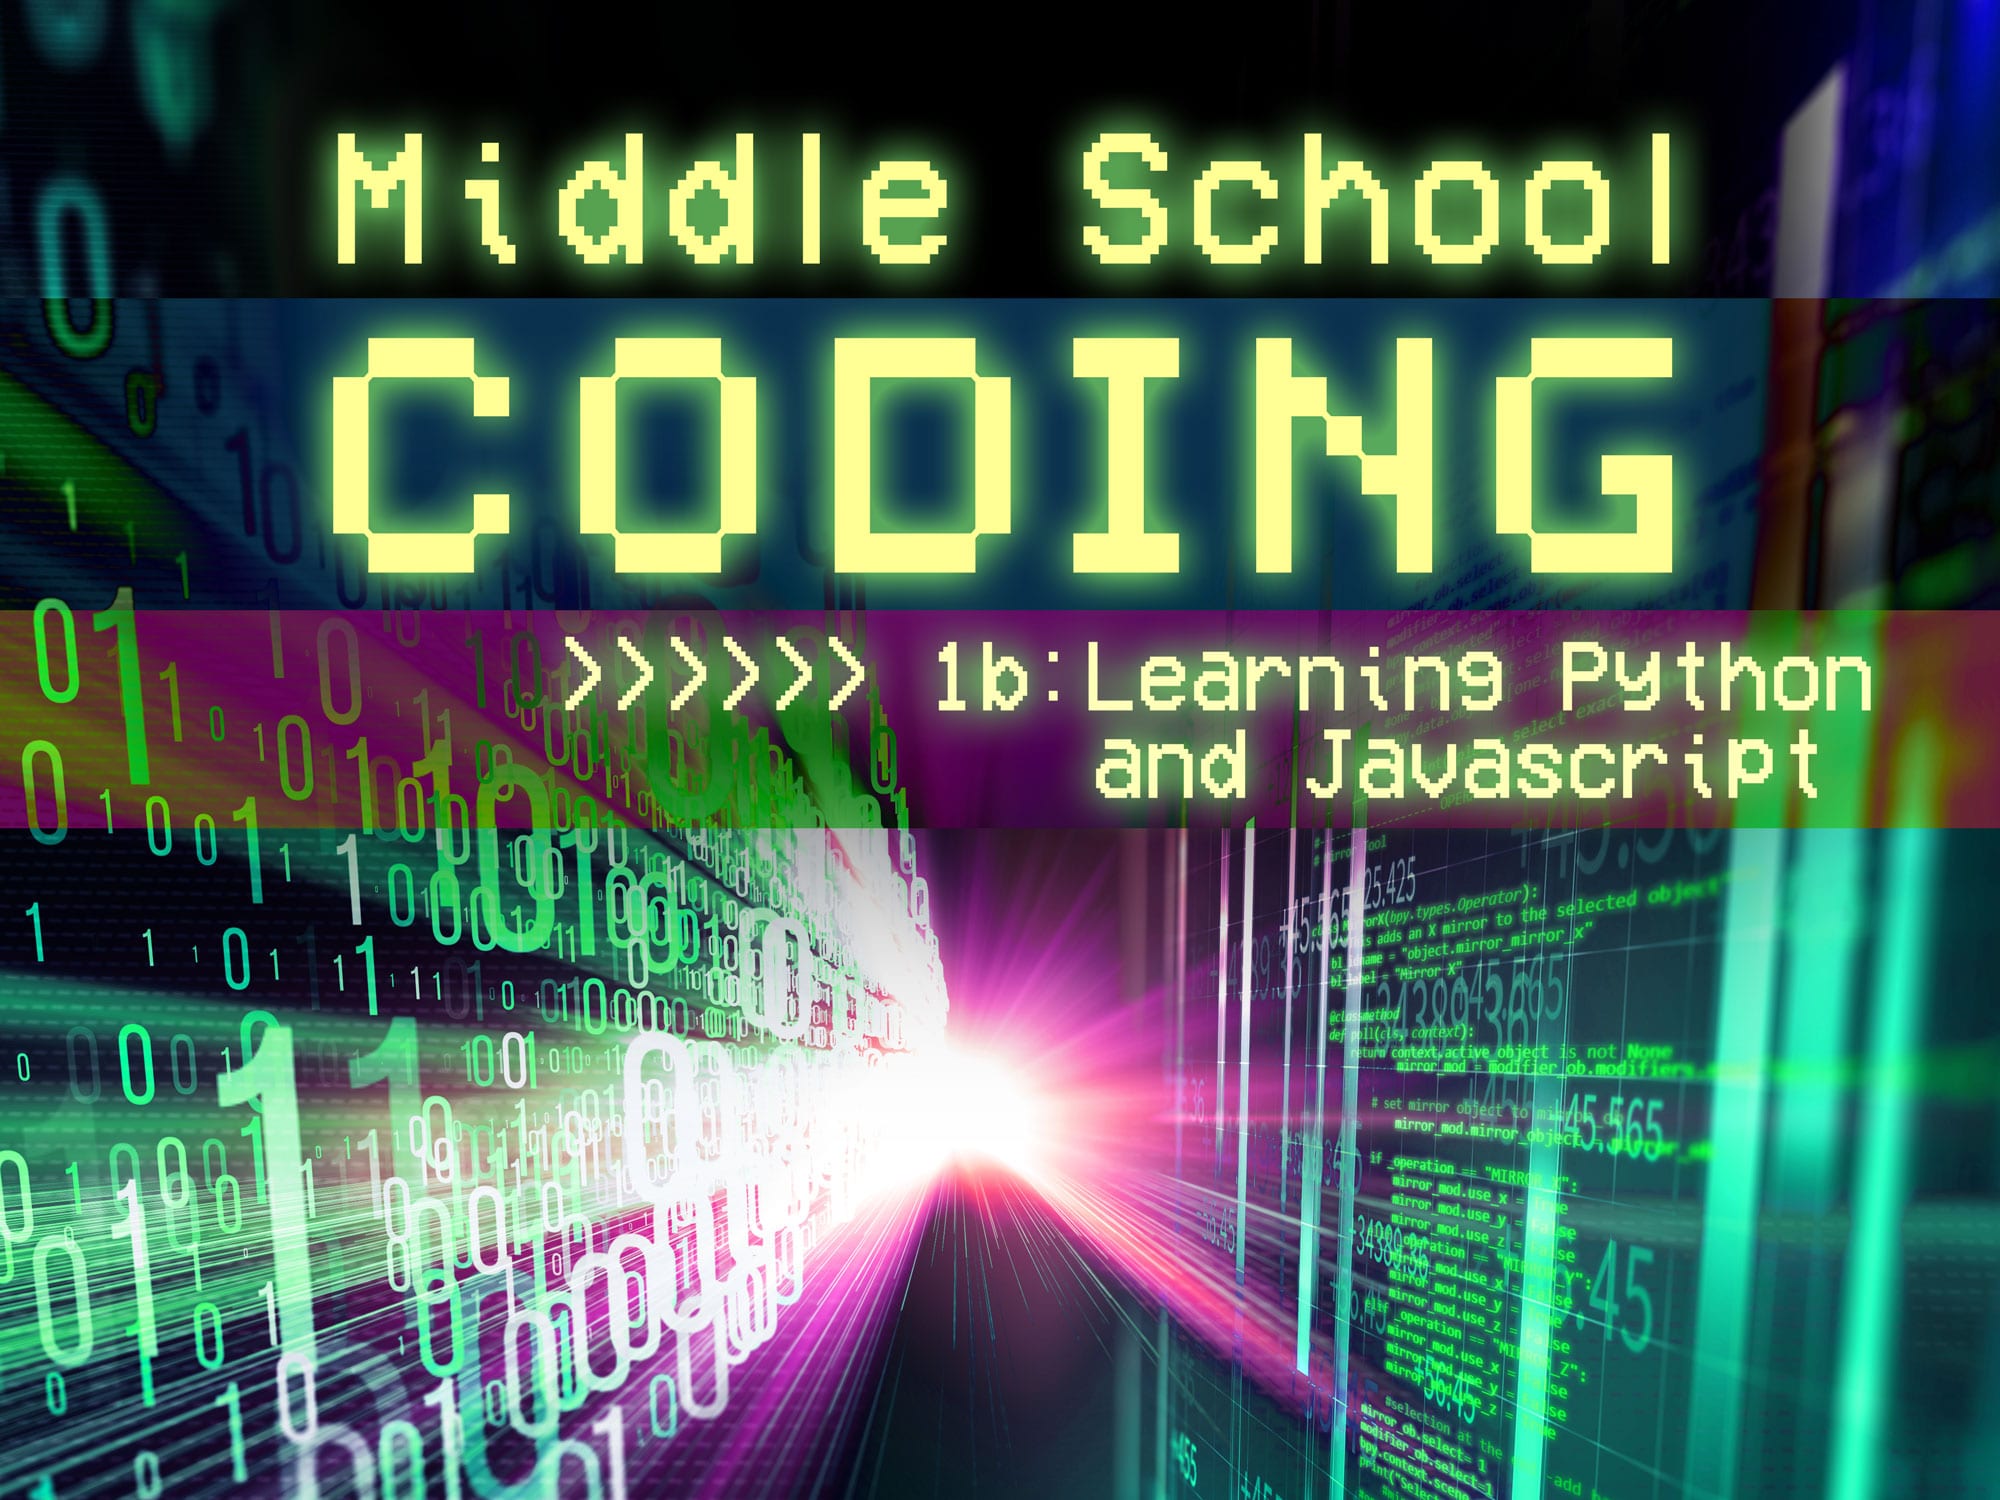 Middle School Coding 1b